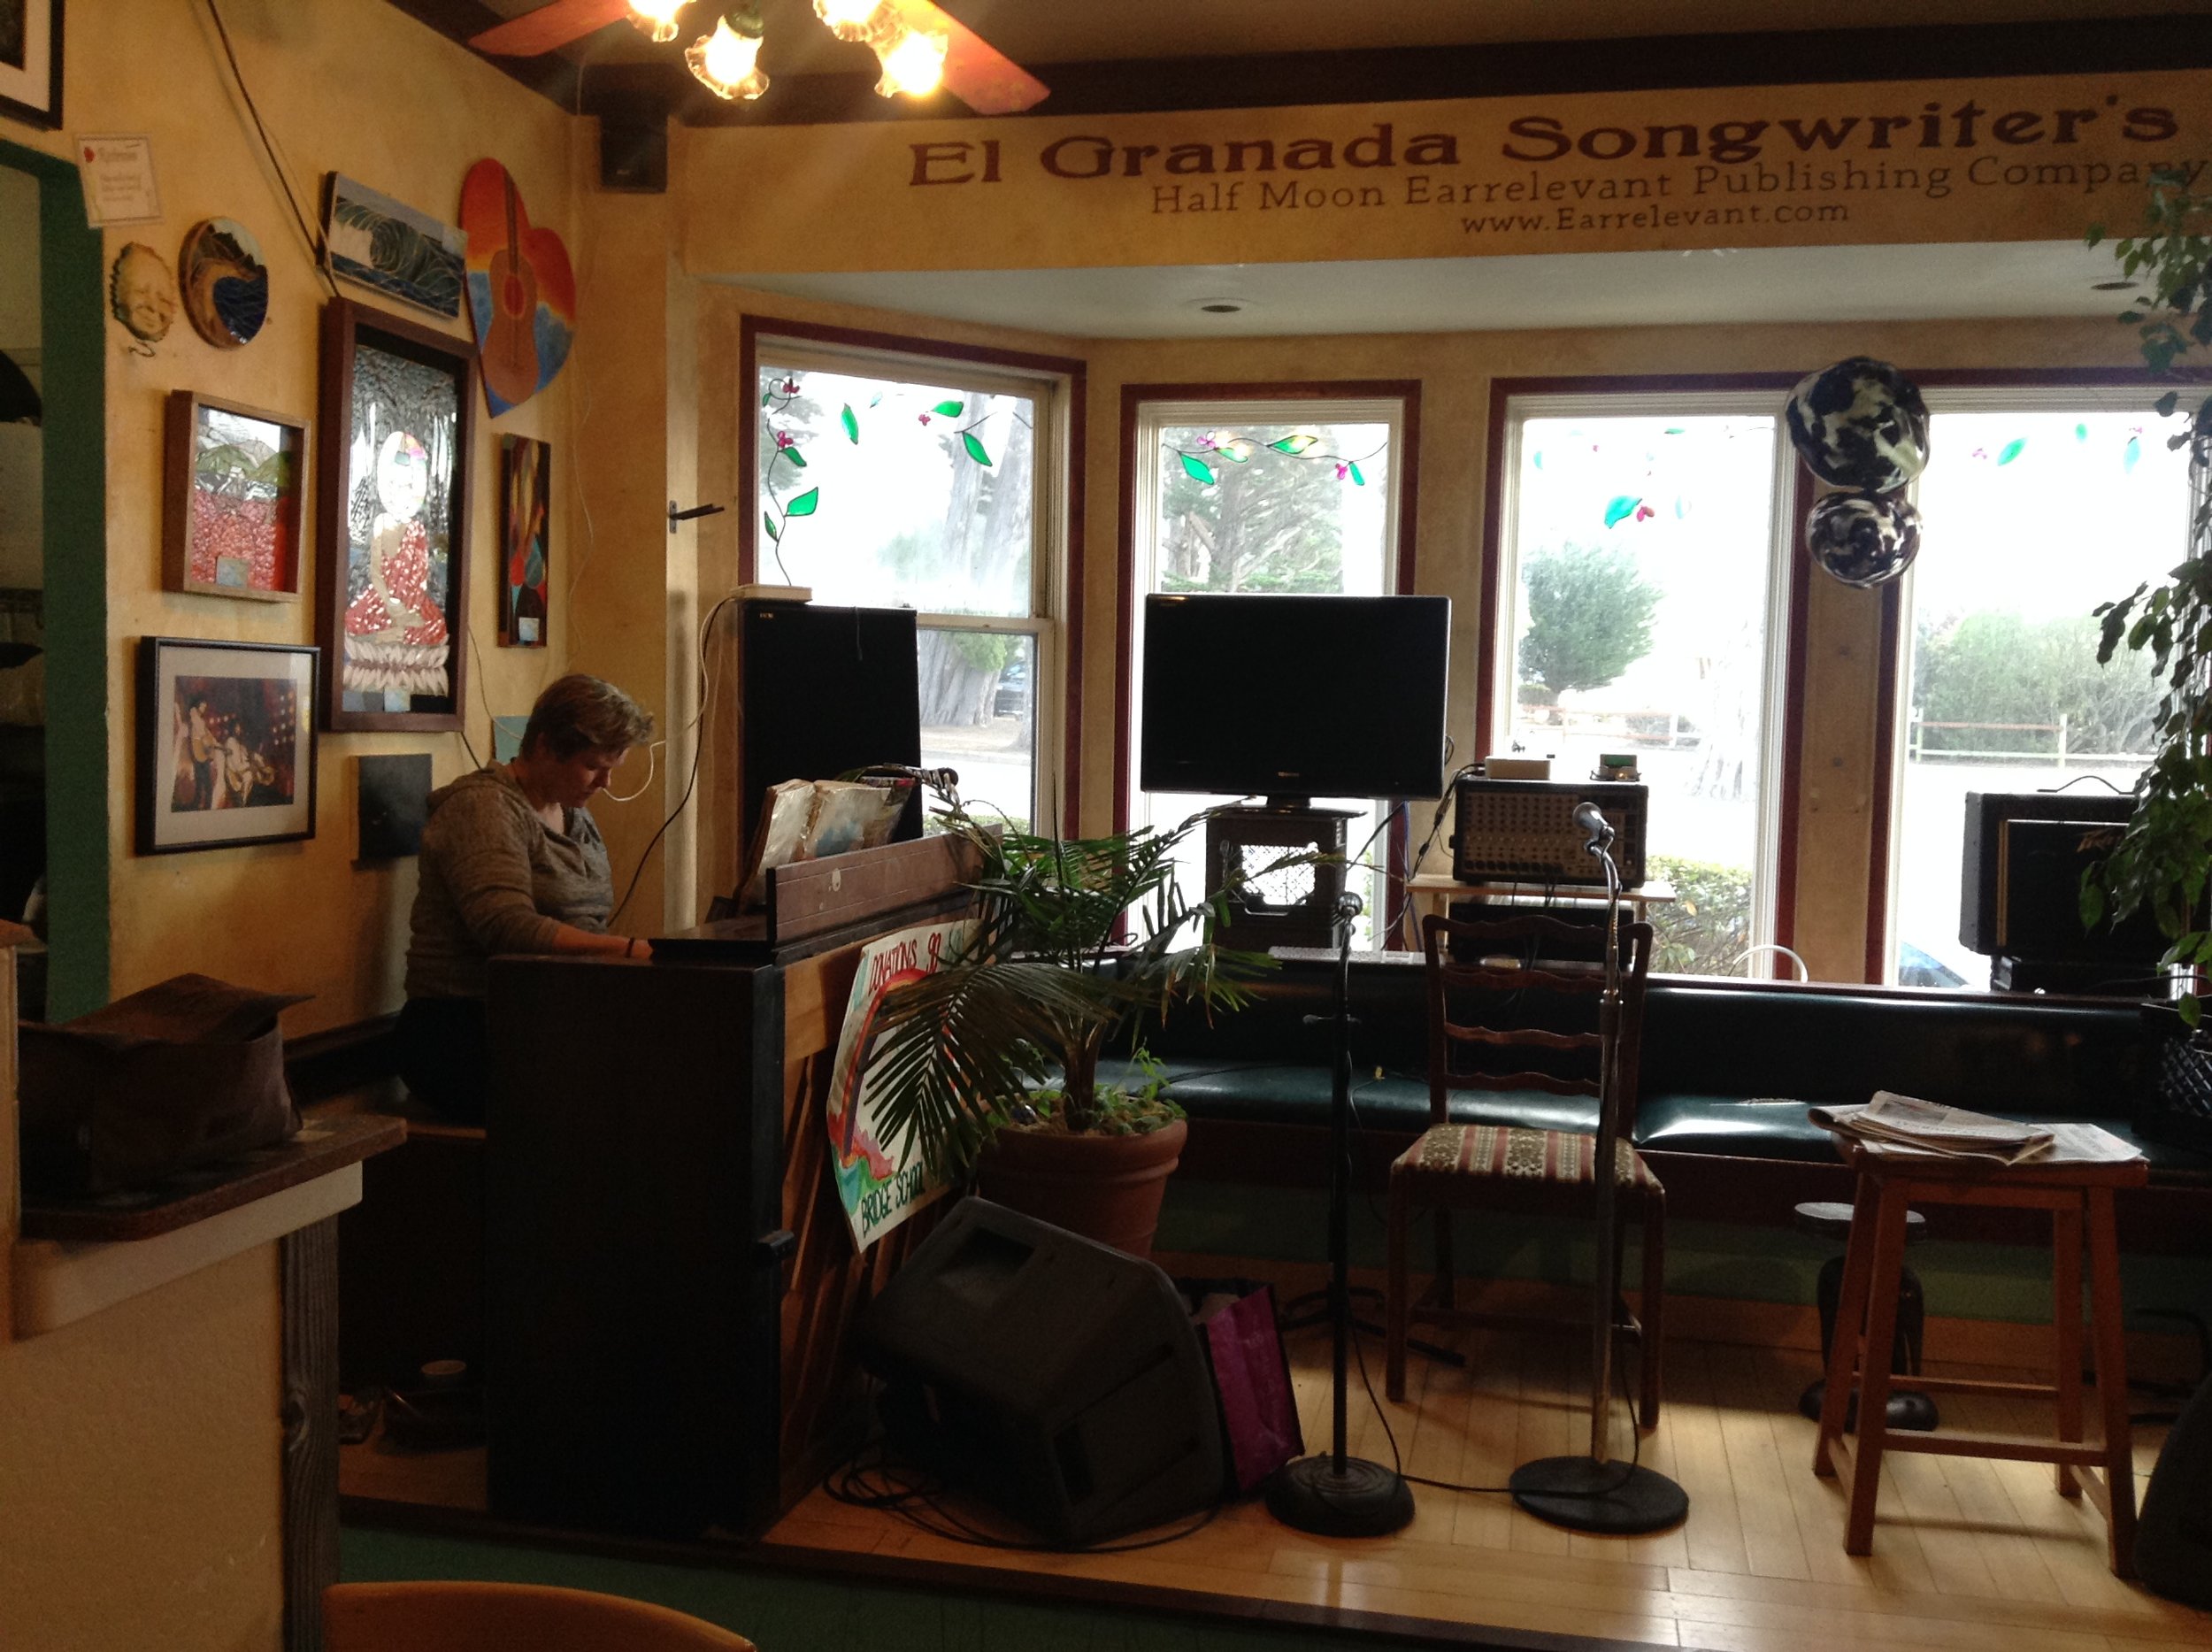 Shirley plays the piano at Cafe Classique, El Granada.